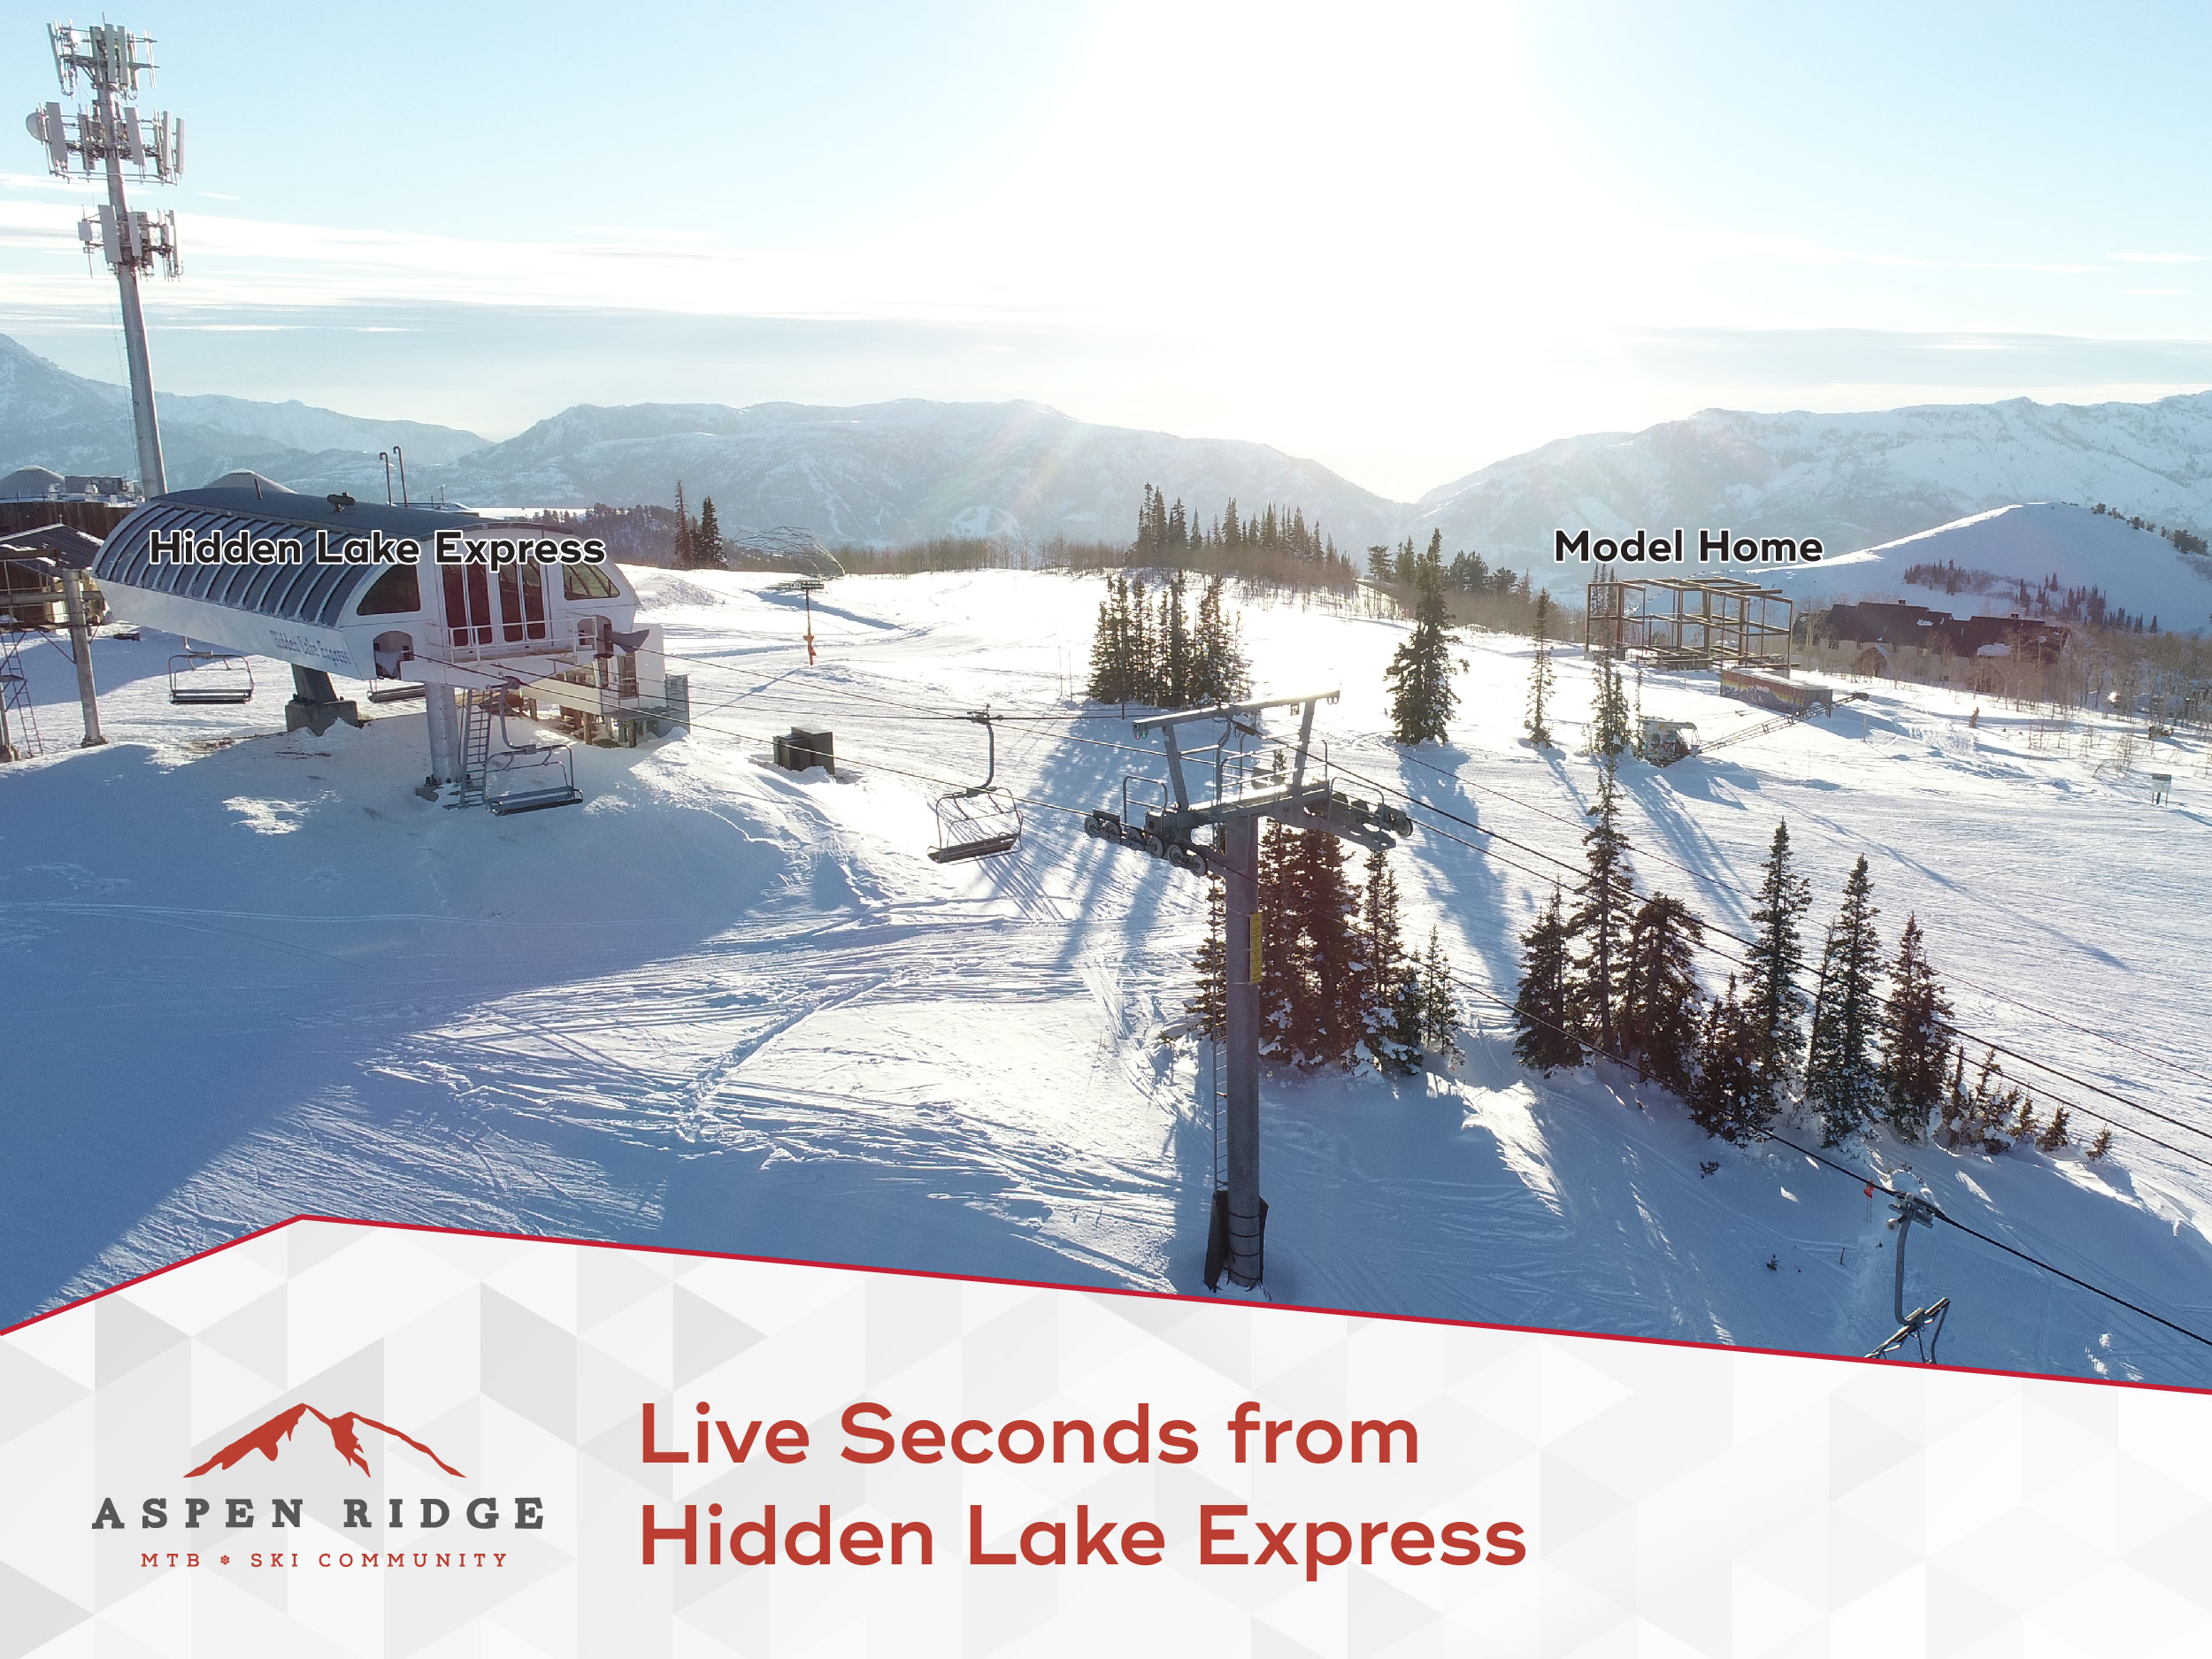 Hidden Lake Expresses proximity to Aspen Ridge's Model Home